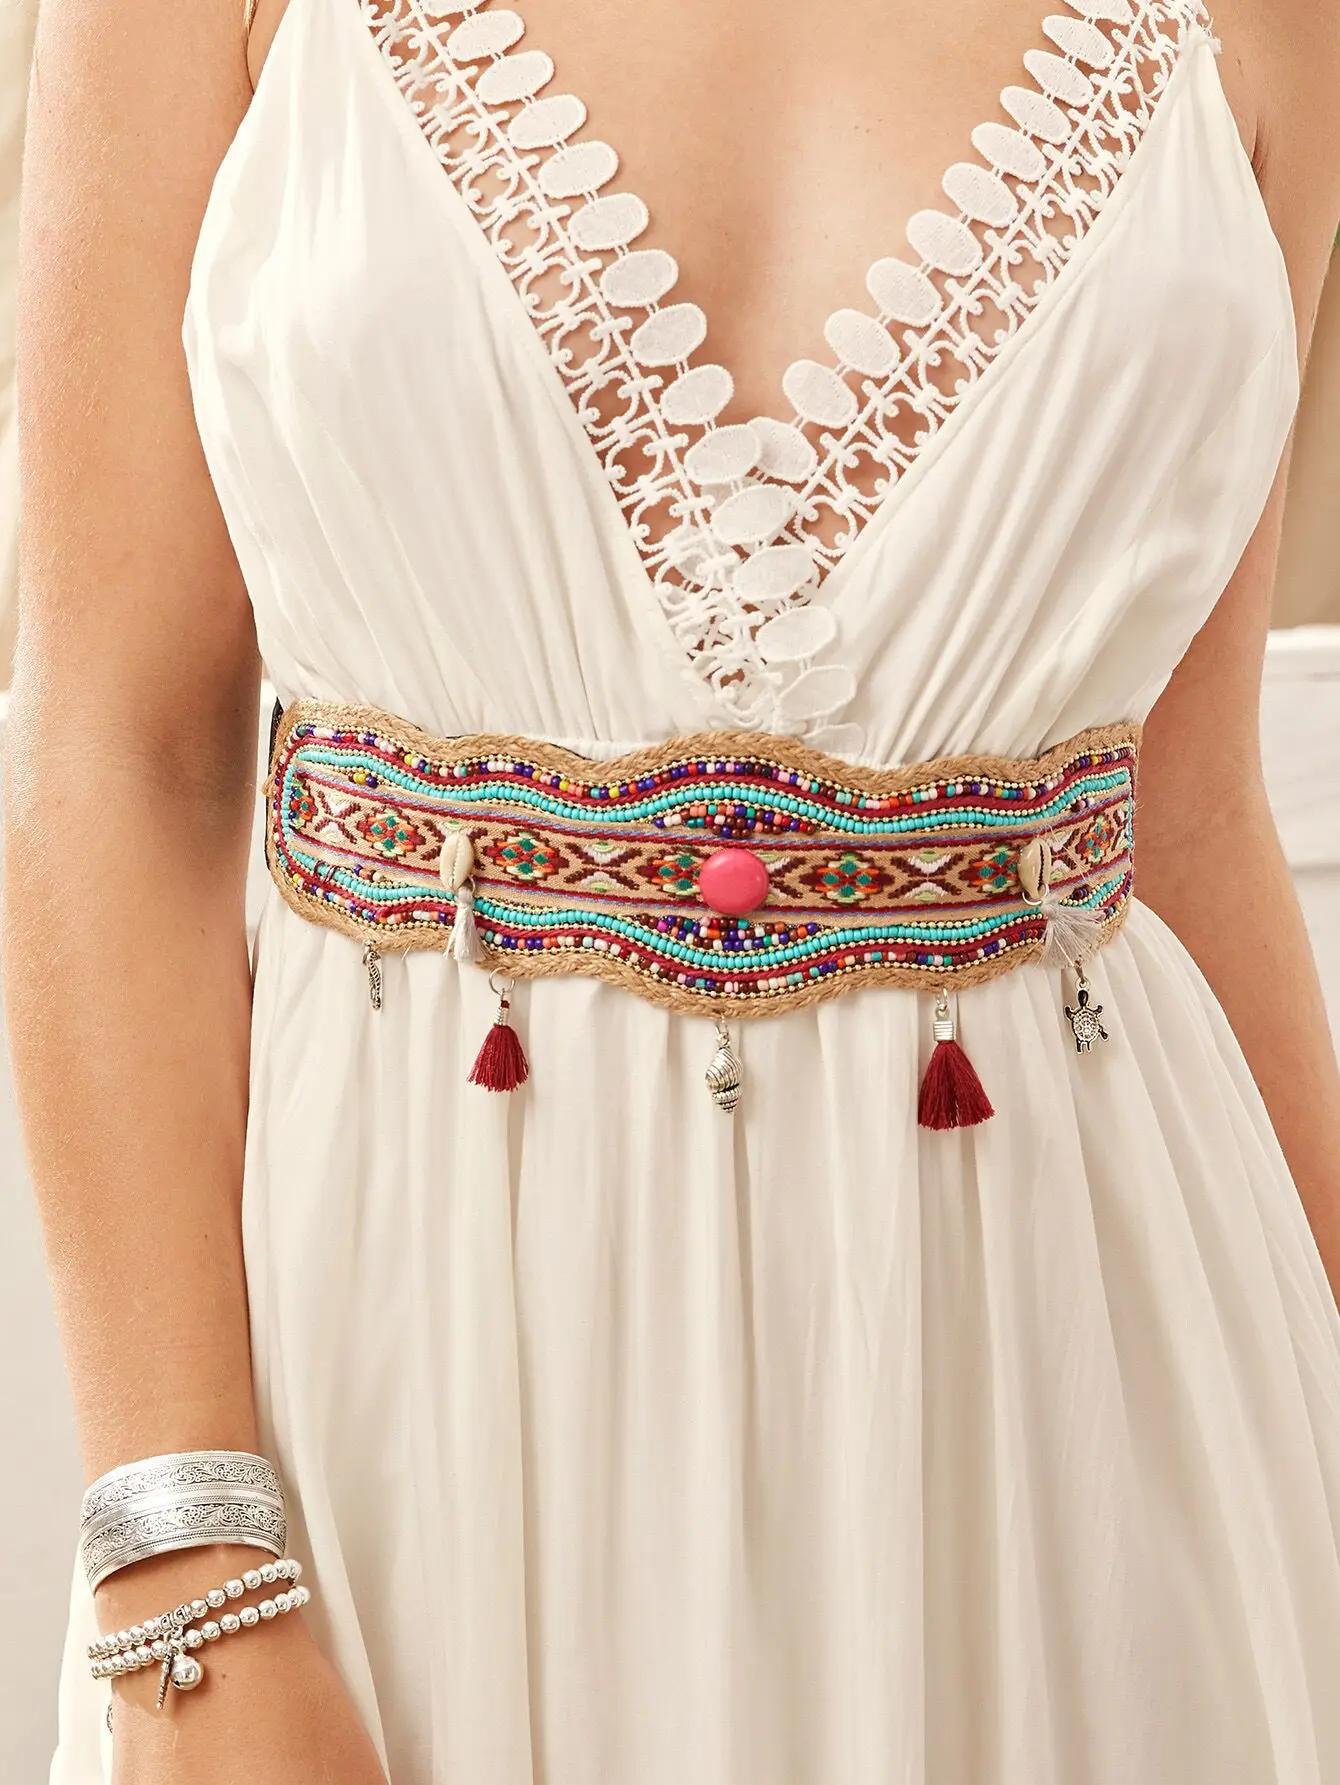 

Bohemian Ethnic Elastic Belly Chains Wide Corset Women Beads Waistbands Dress Belt Dance Body Chain Gypsy Indian Tribal Jewelry